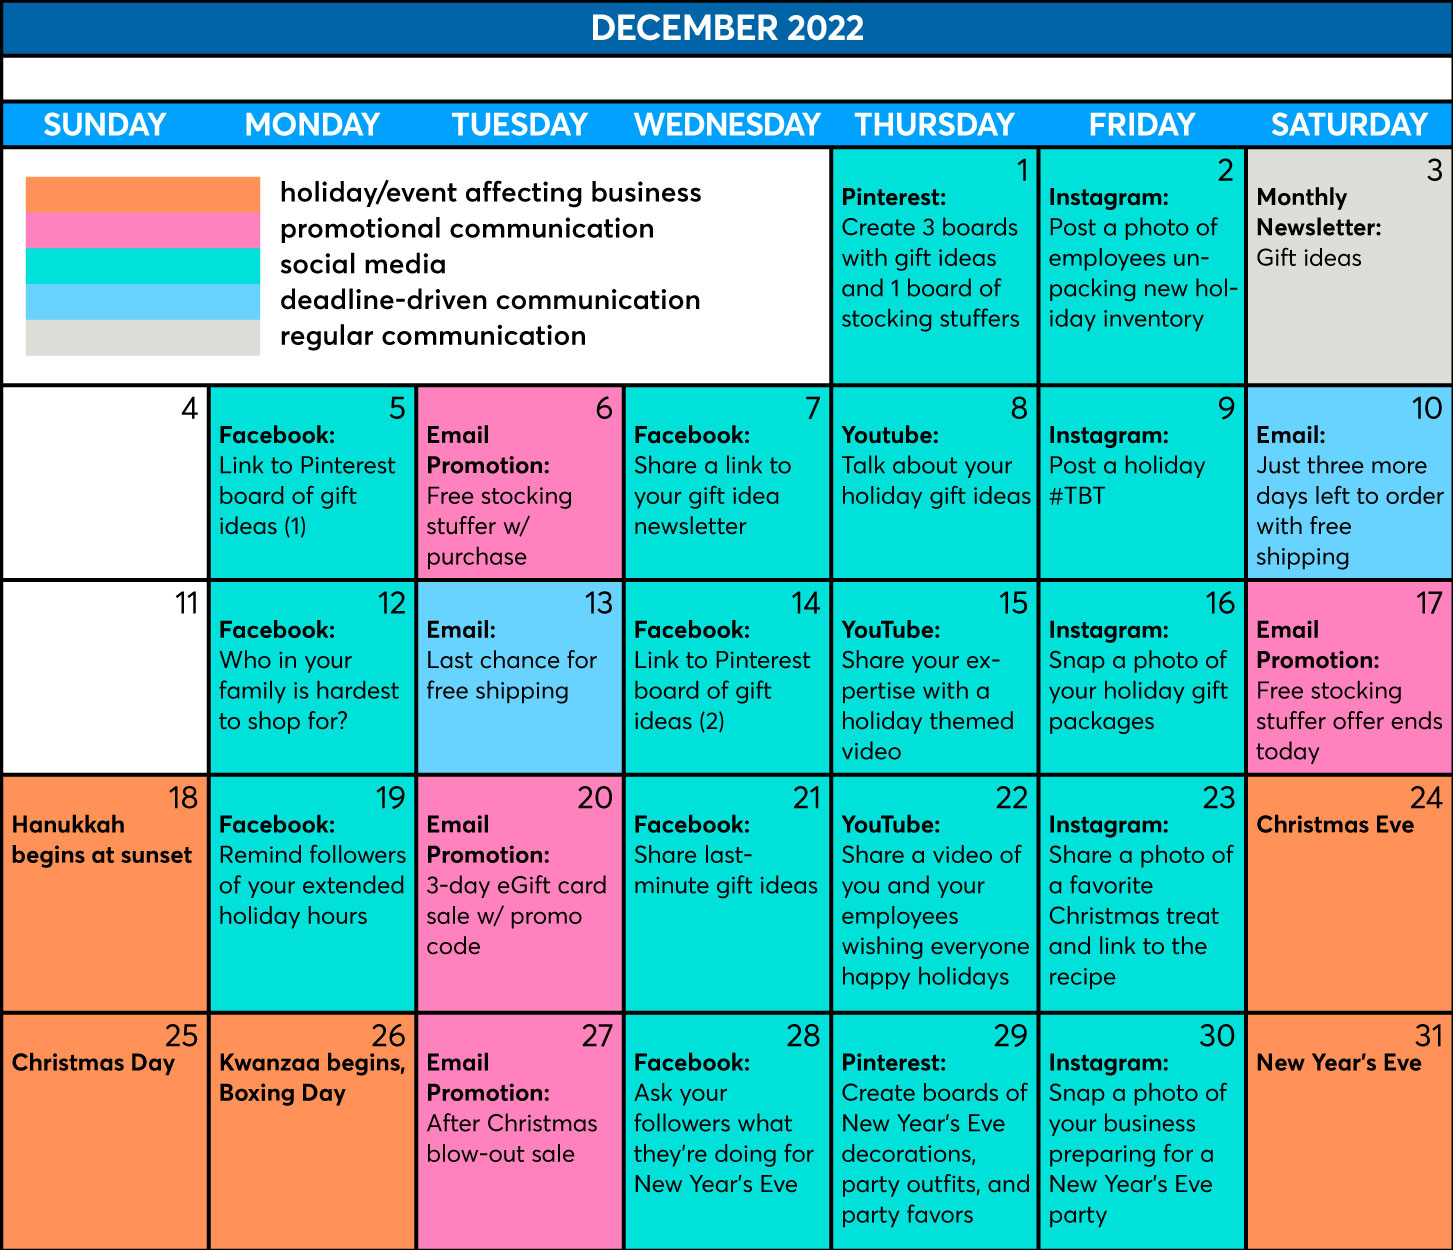 December 2022 holiday social media strategy calendar layout example